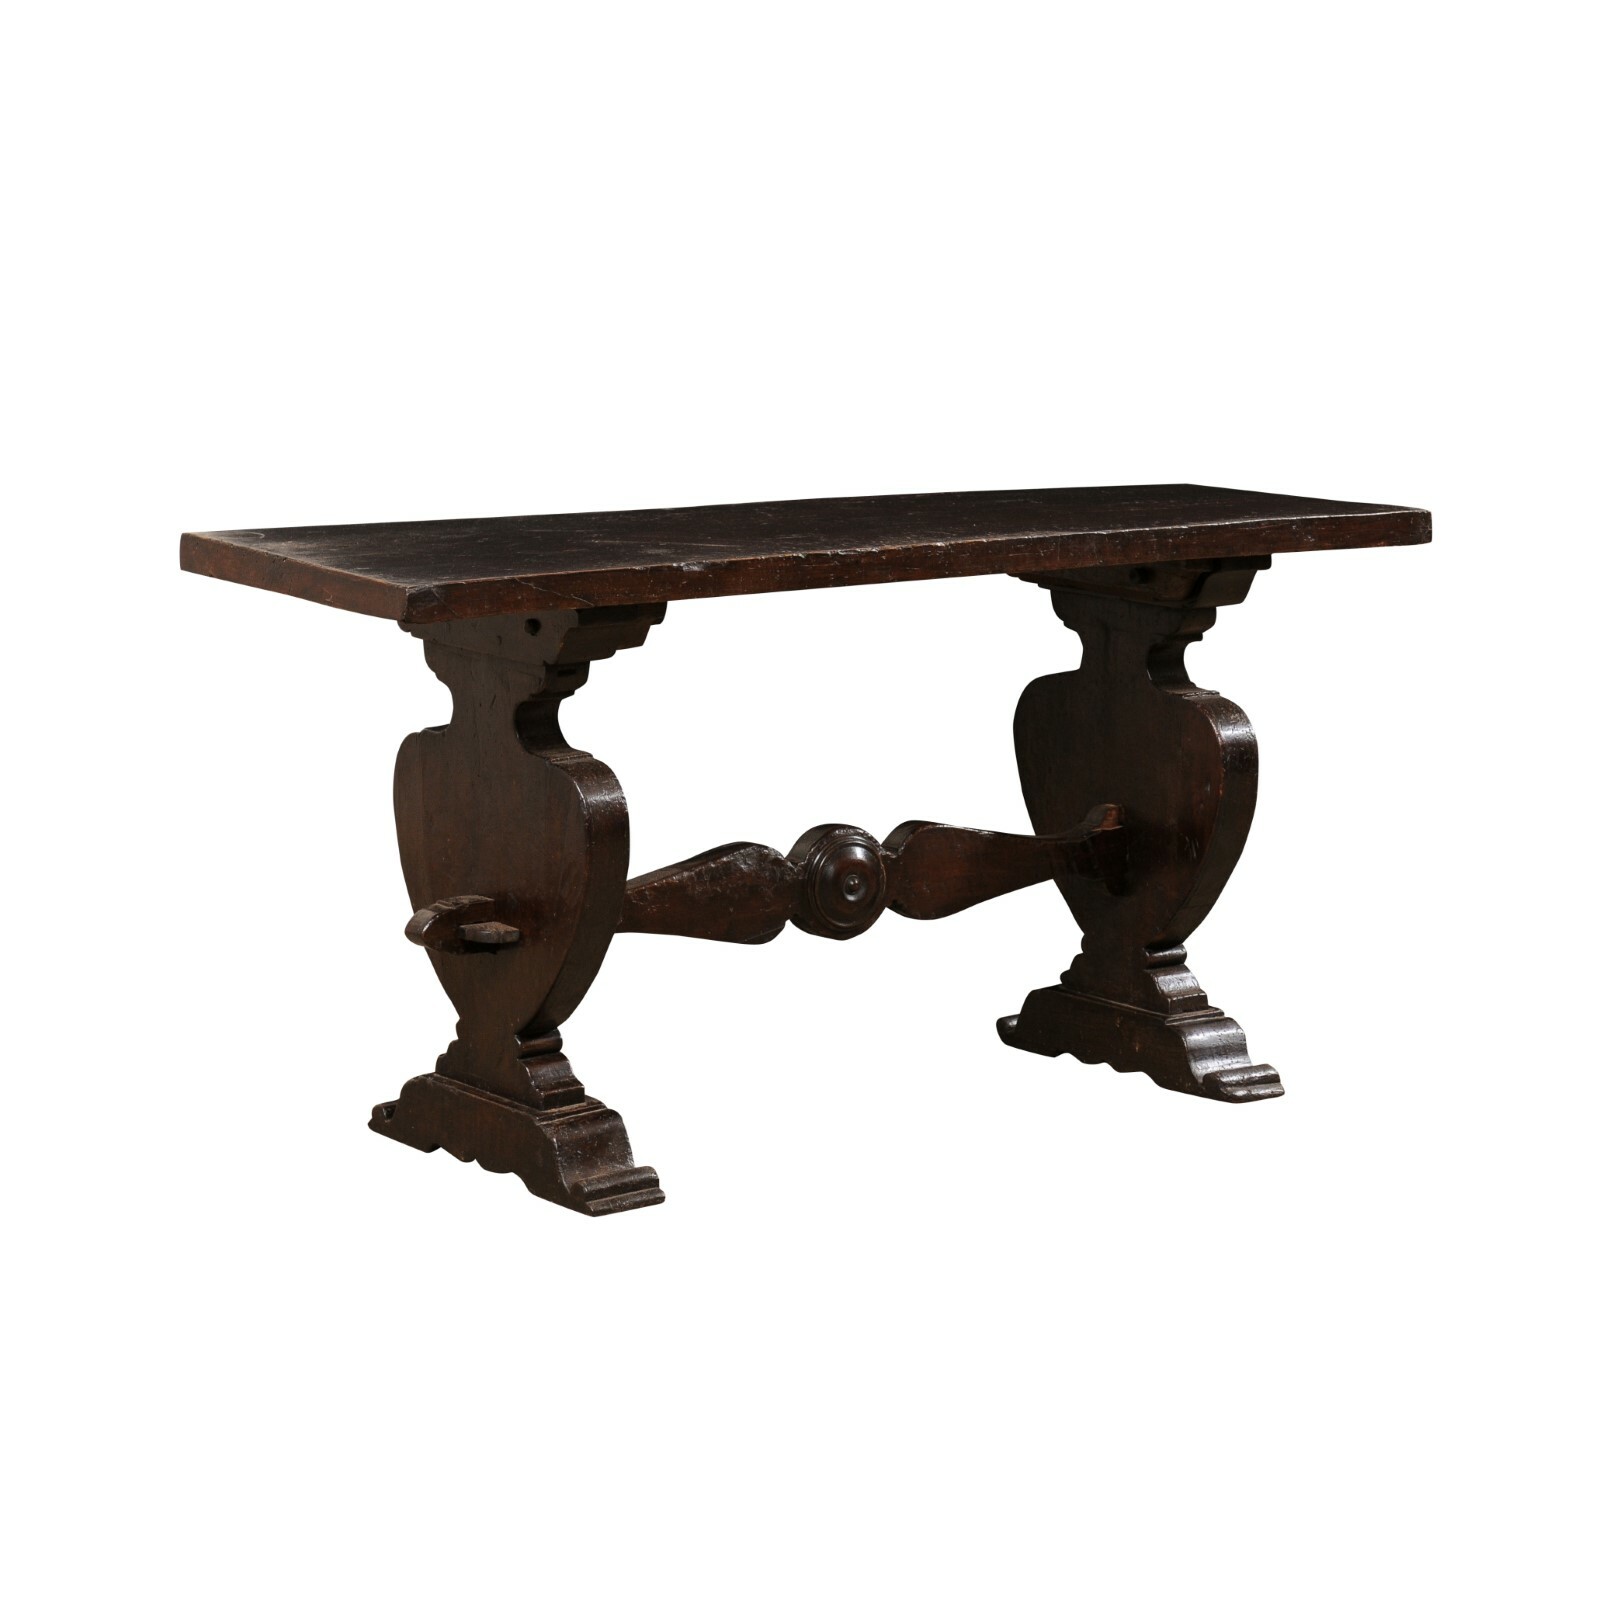 18th C. Italian Trestle Leg Table or Desk